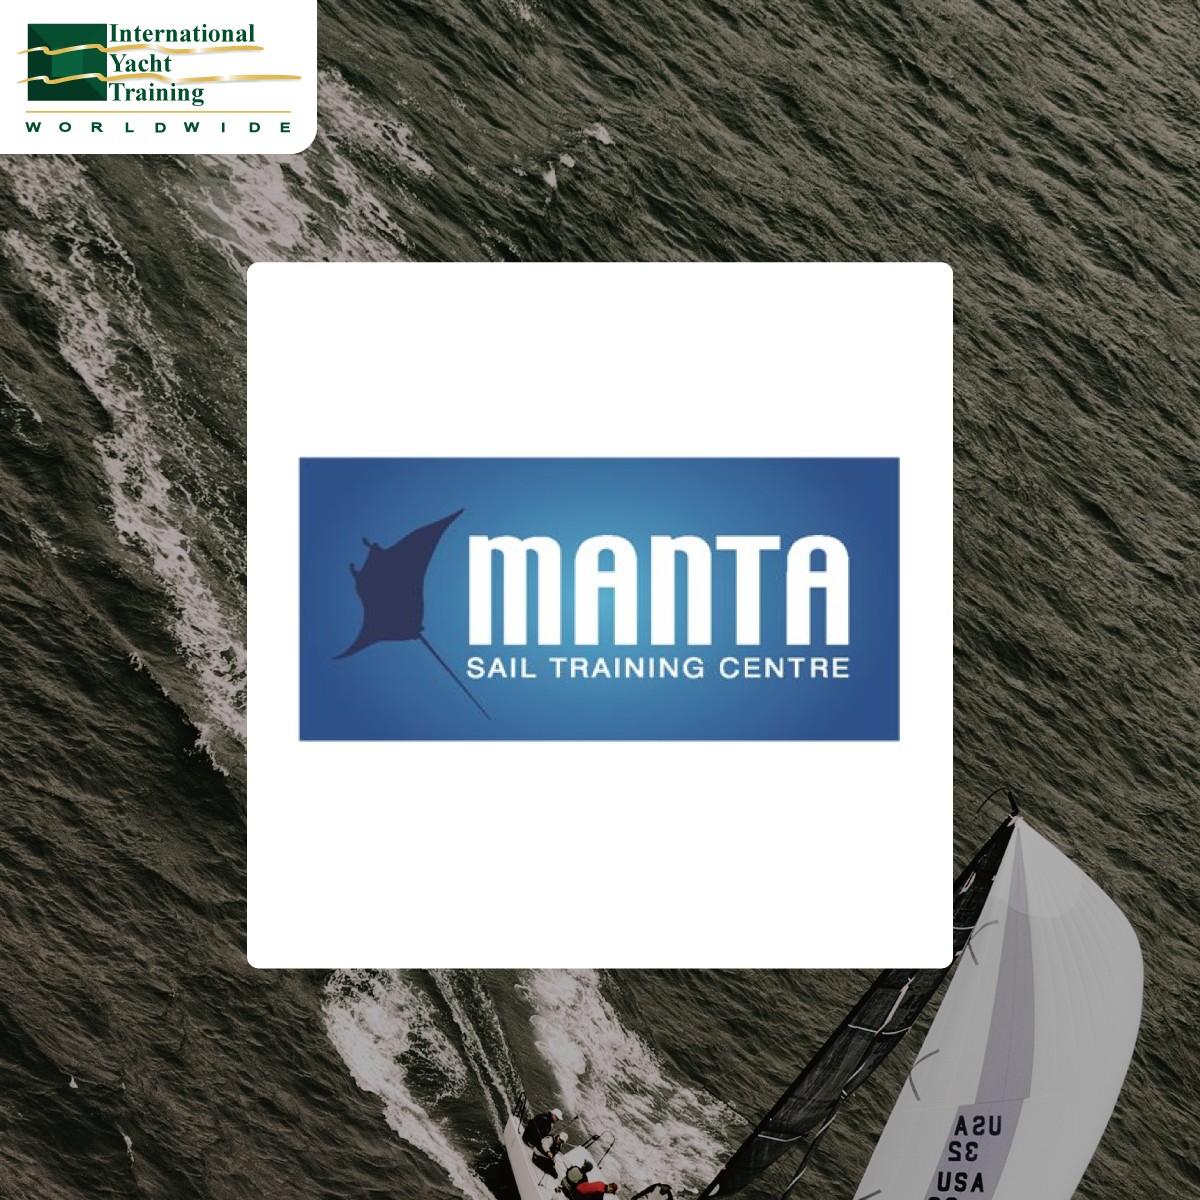 IYT announce MANTA as a new partner school in Vietnam !